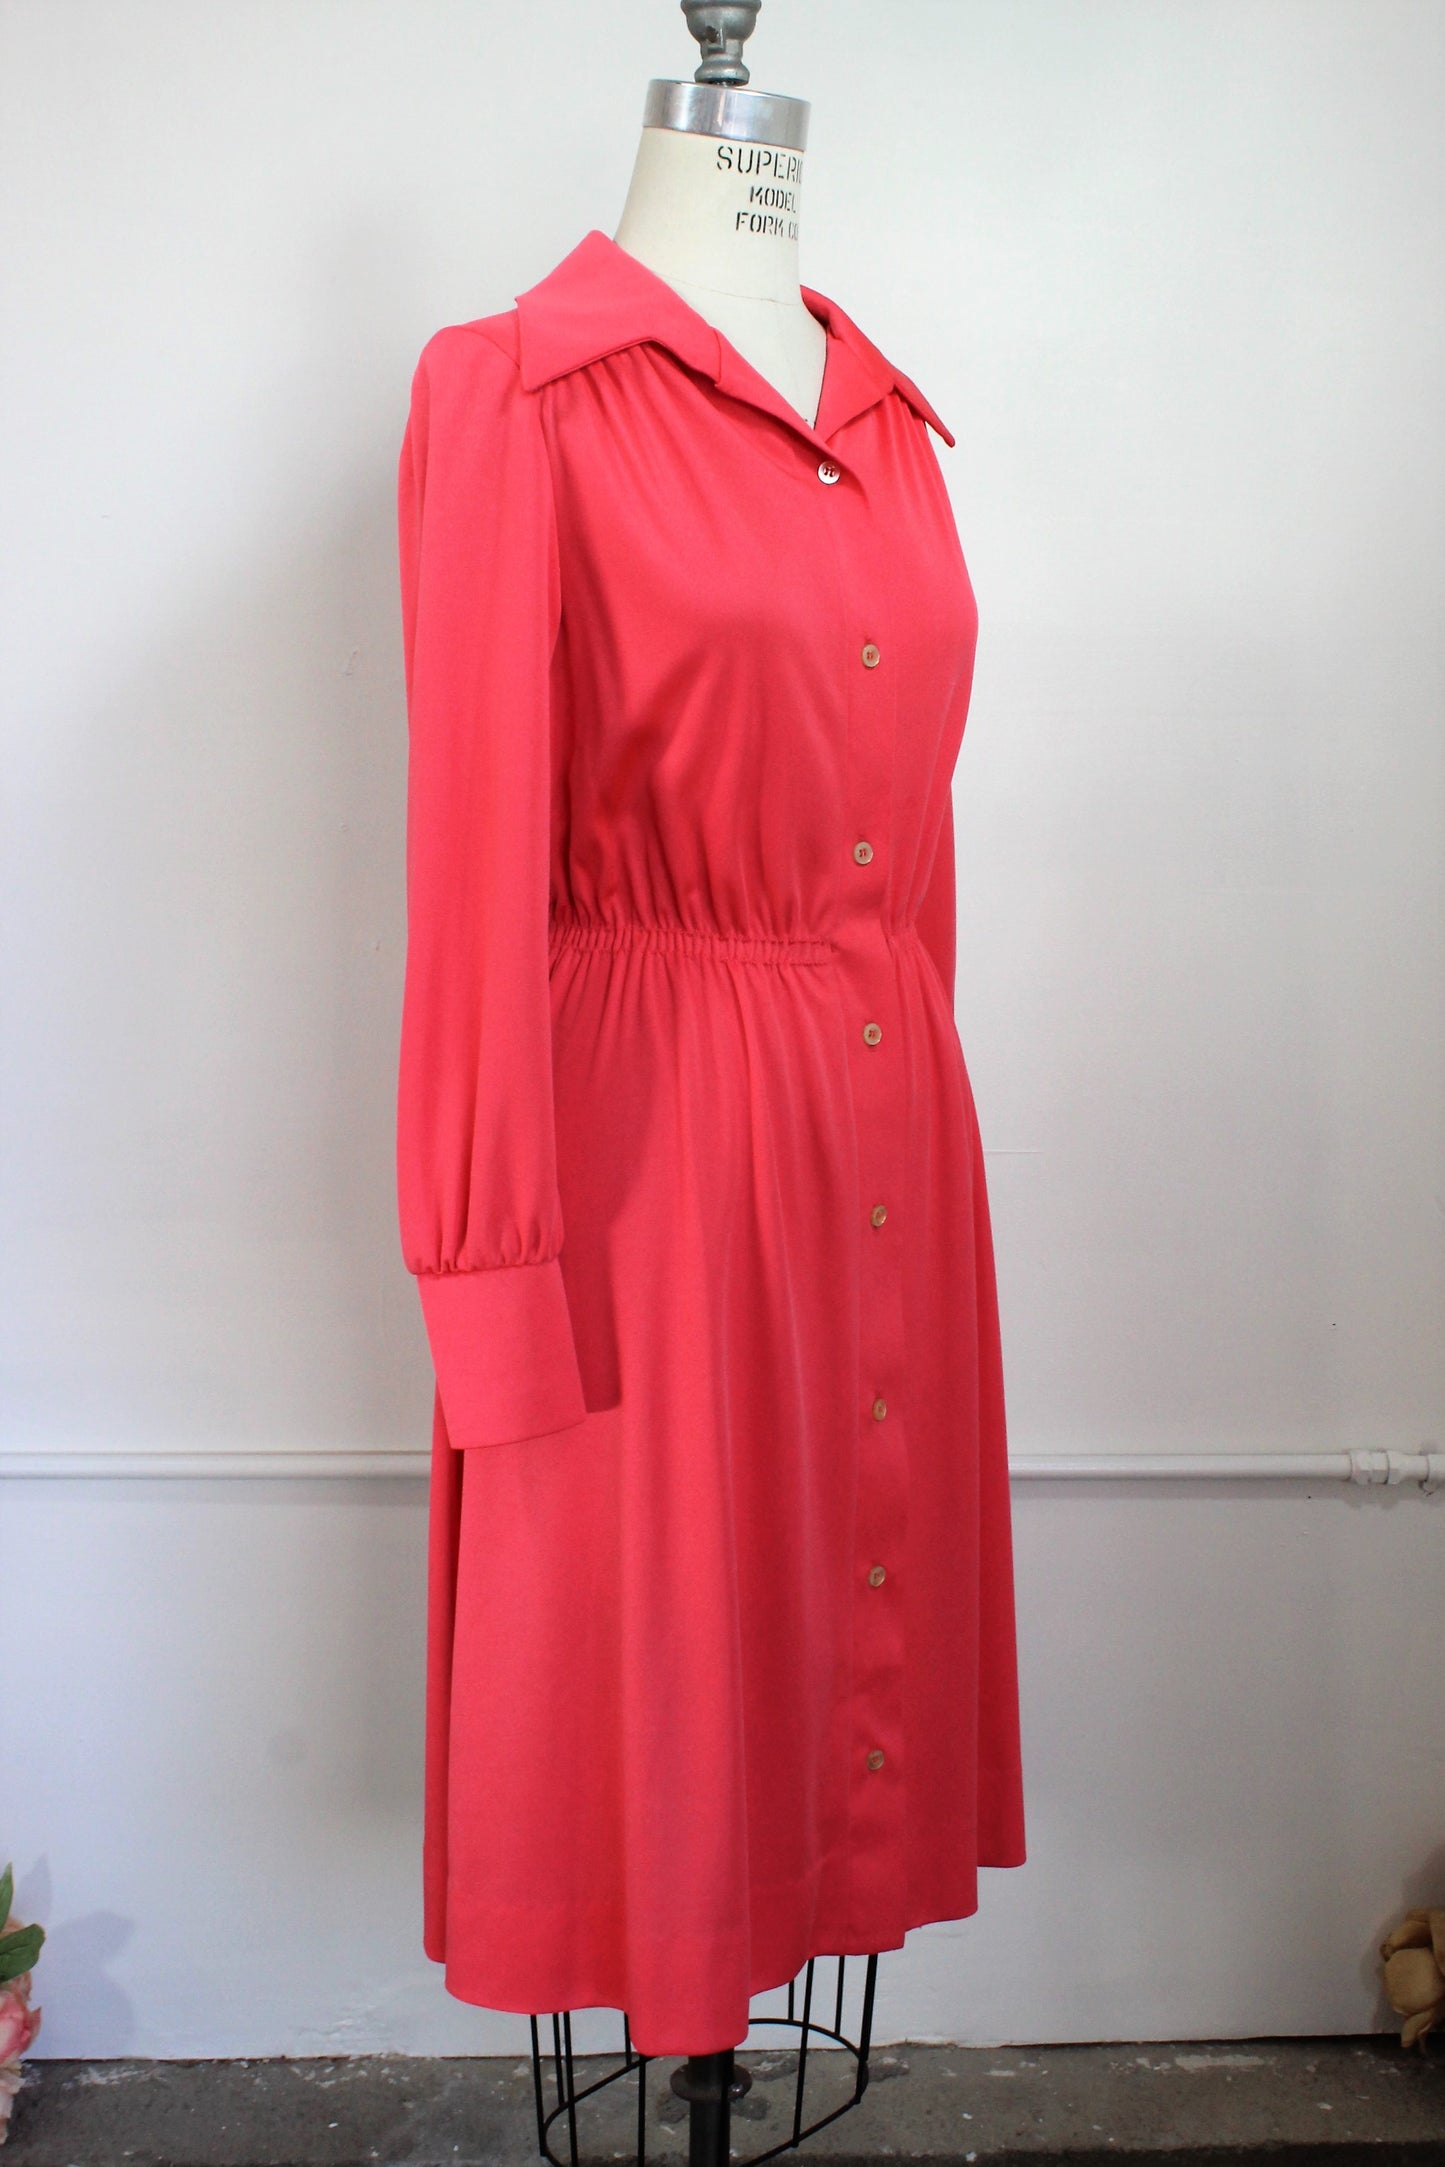 Vintage 1970s Shirtwaist Dress by Plaza South